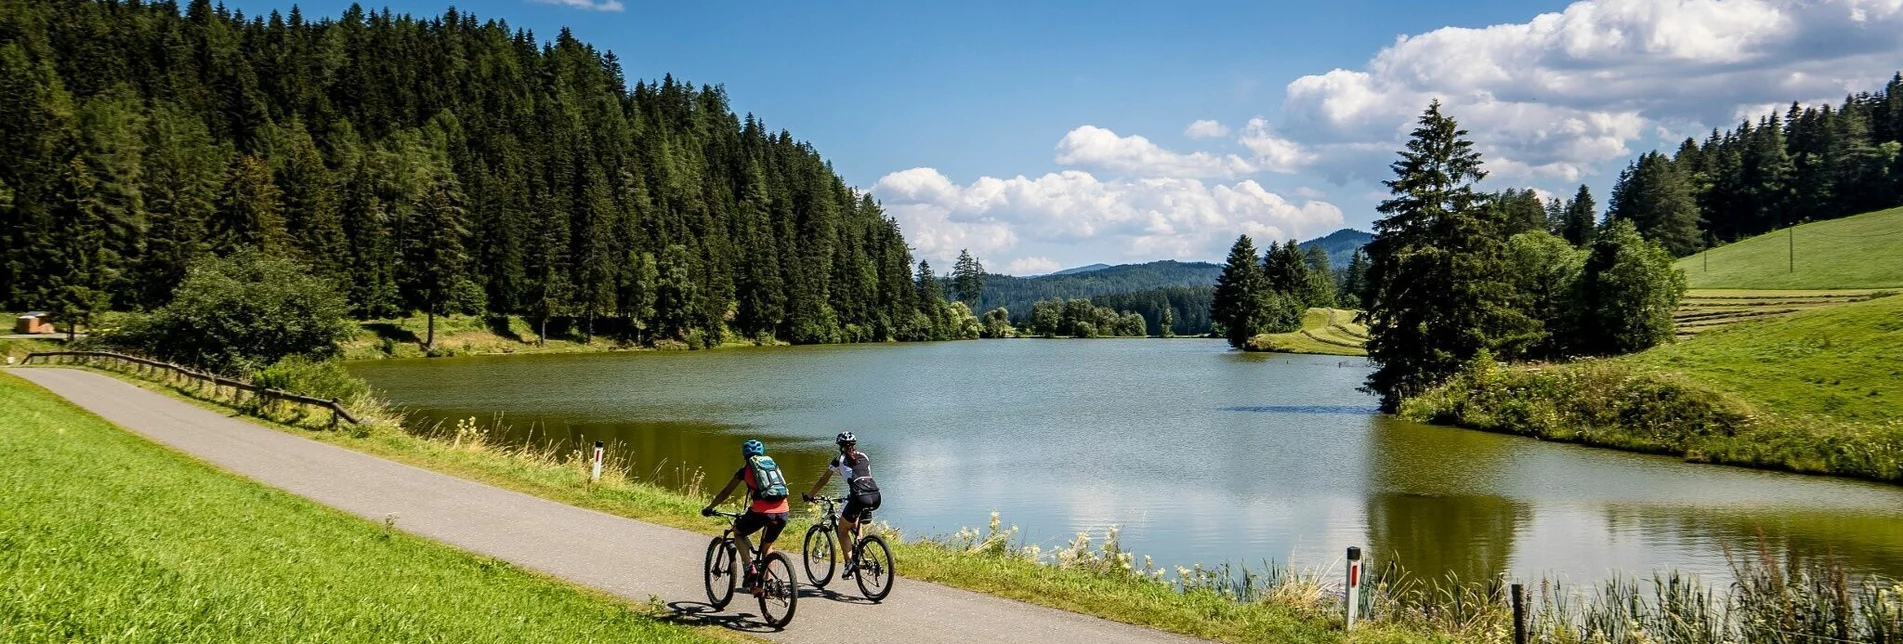 Mountainbike Teich-Runde - Touren-Impression #1 | © Tourismusverband Region Murau